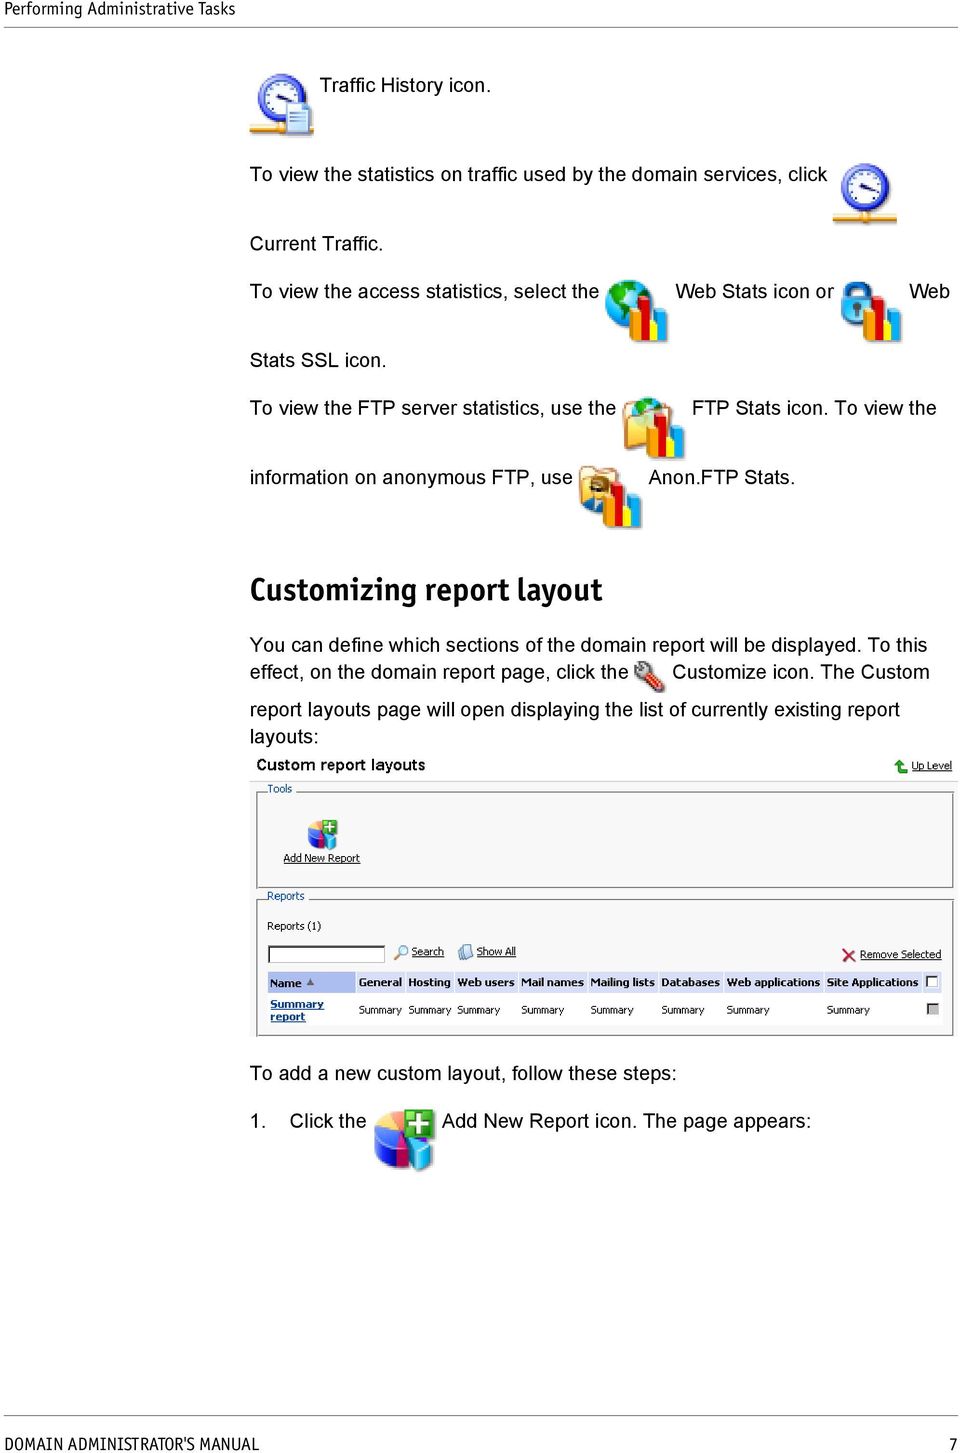 Customizing report